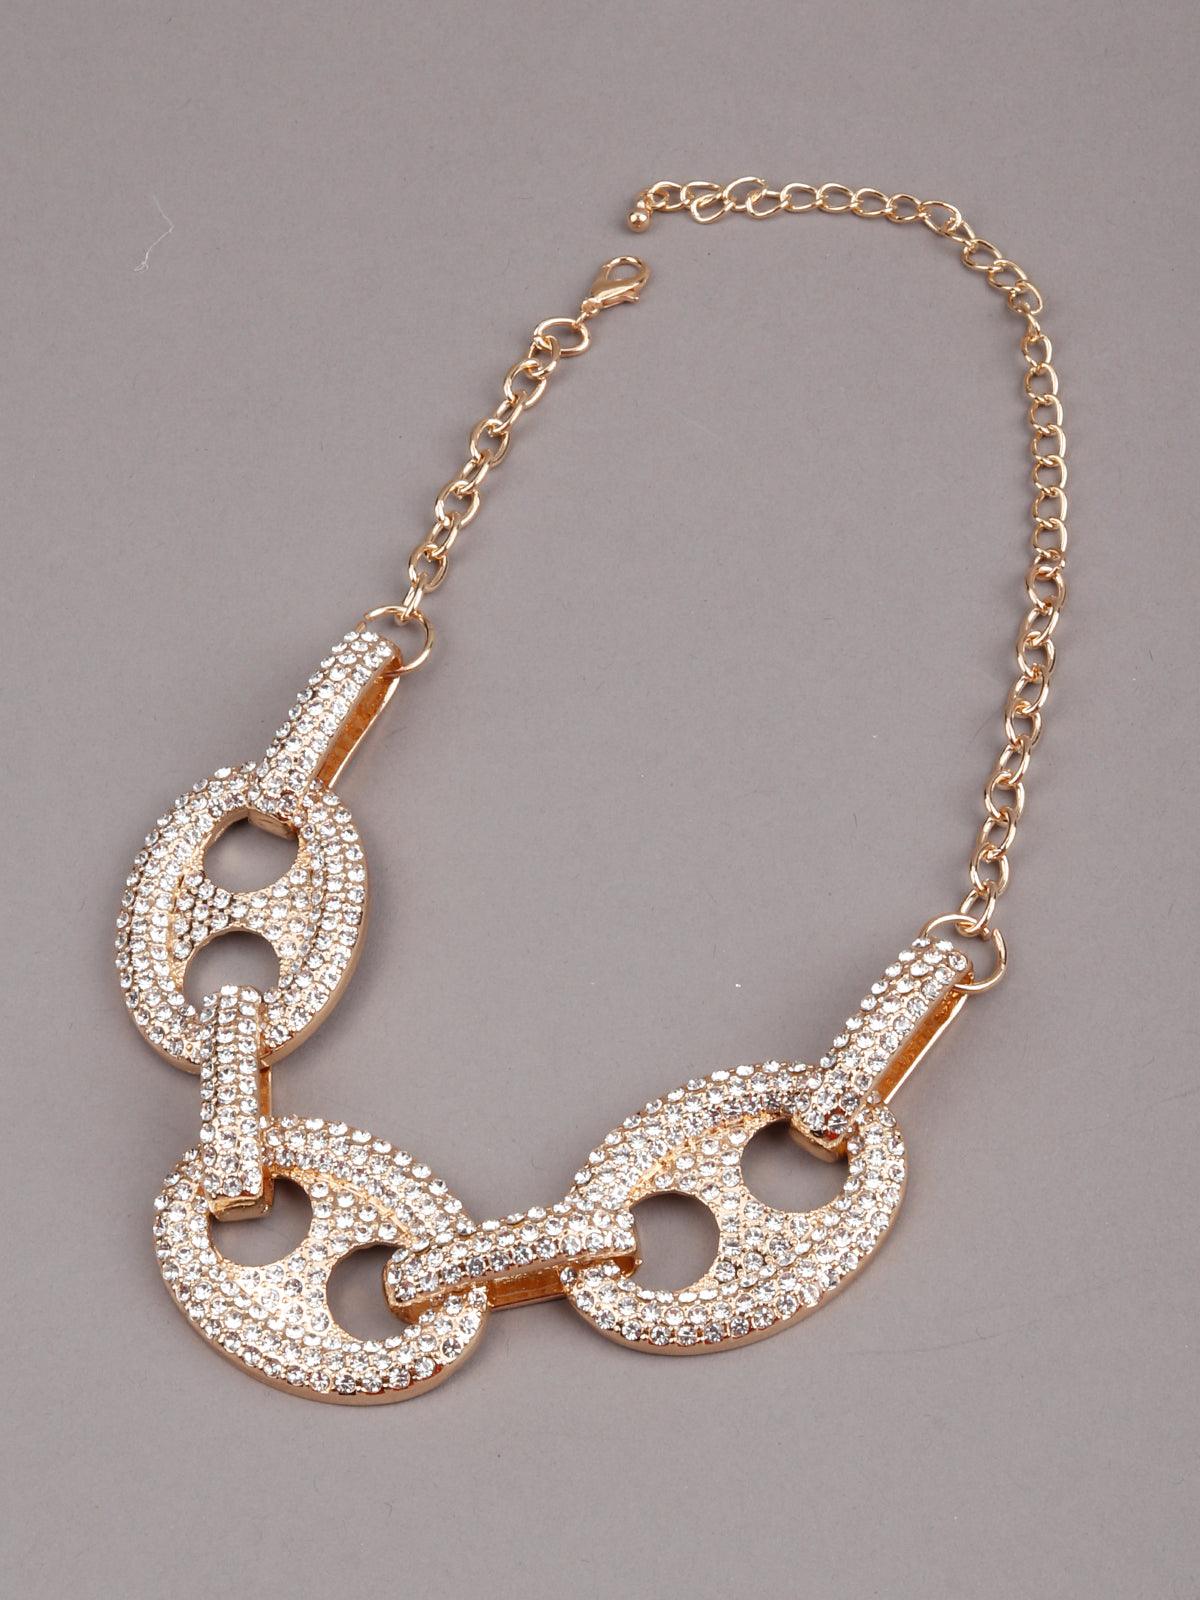 Entangled Oval Shaped Rings Necklace - Odette